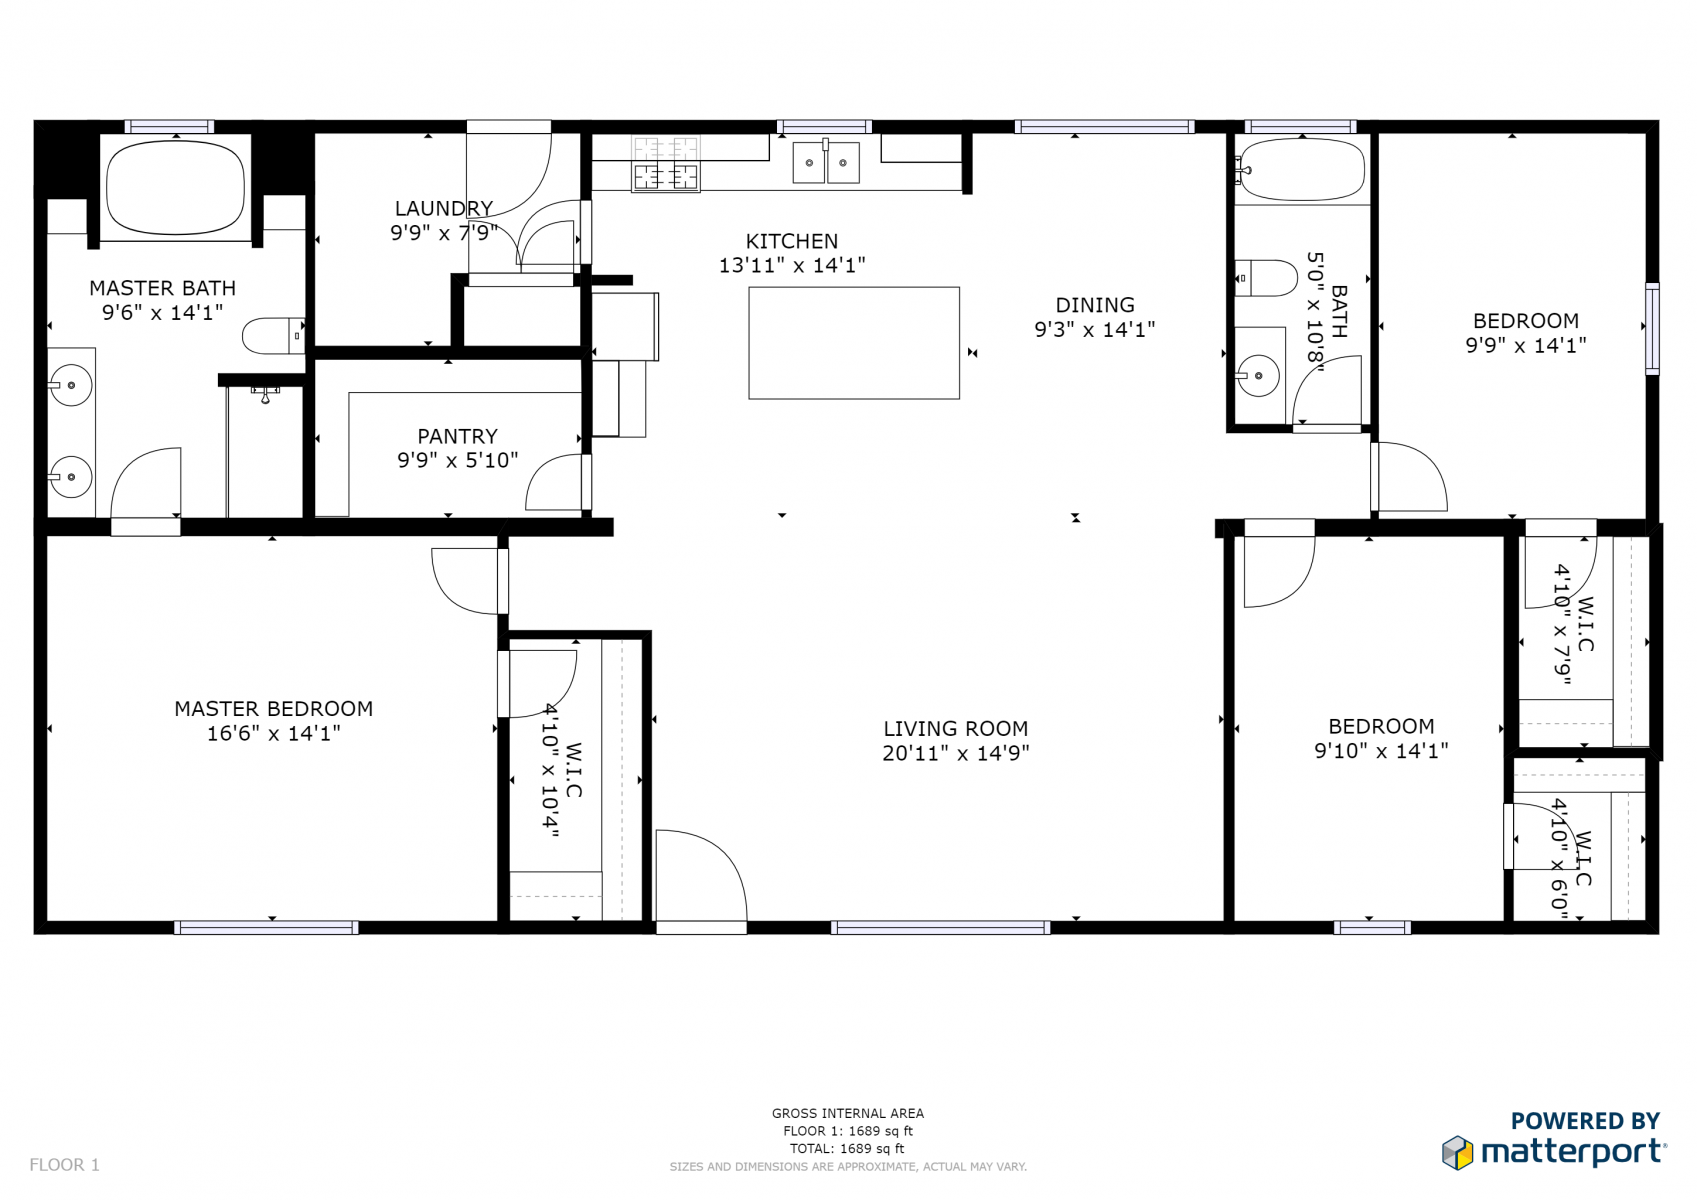 Homes Direct Modular Homes - Model K3060A - Floorplan